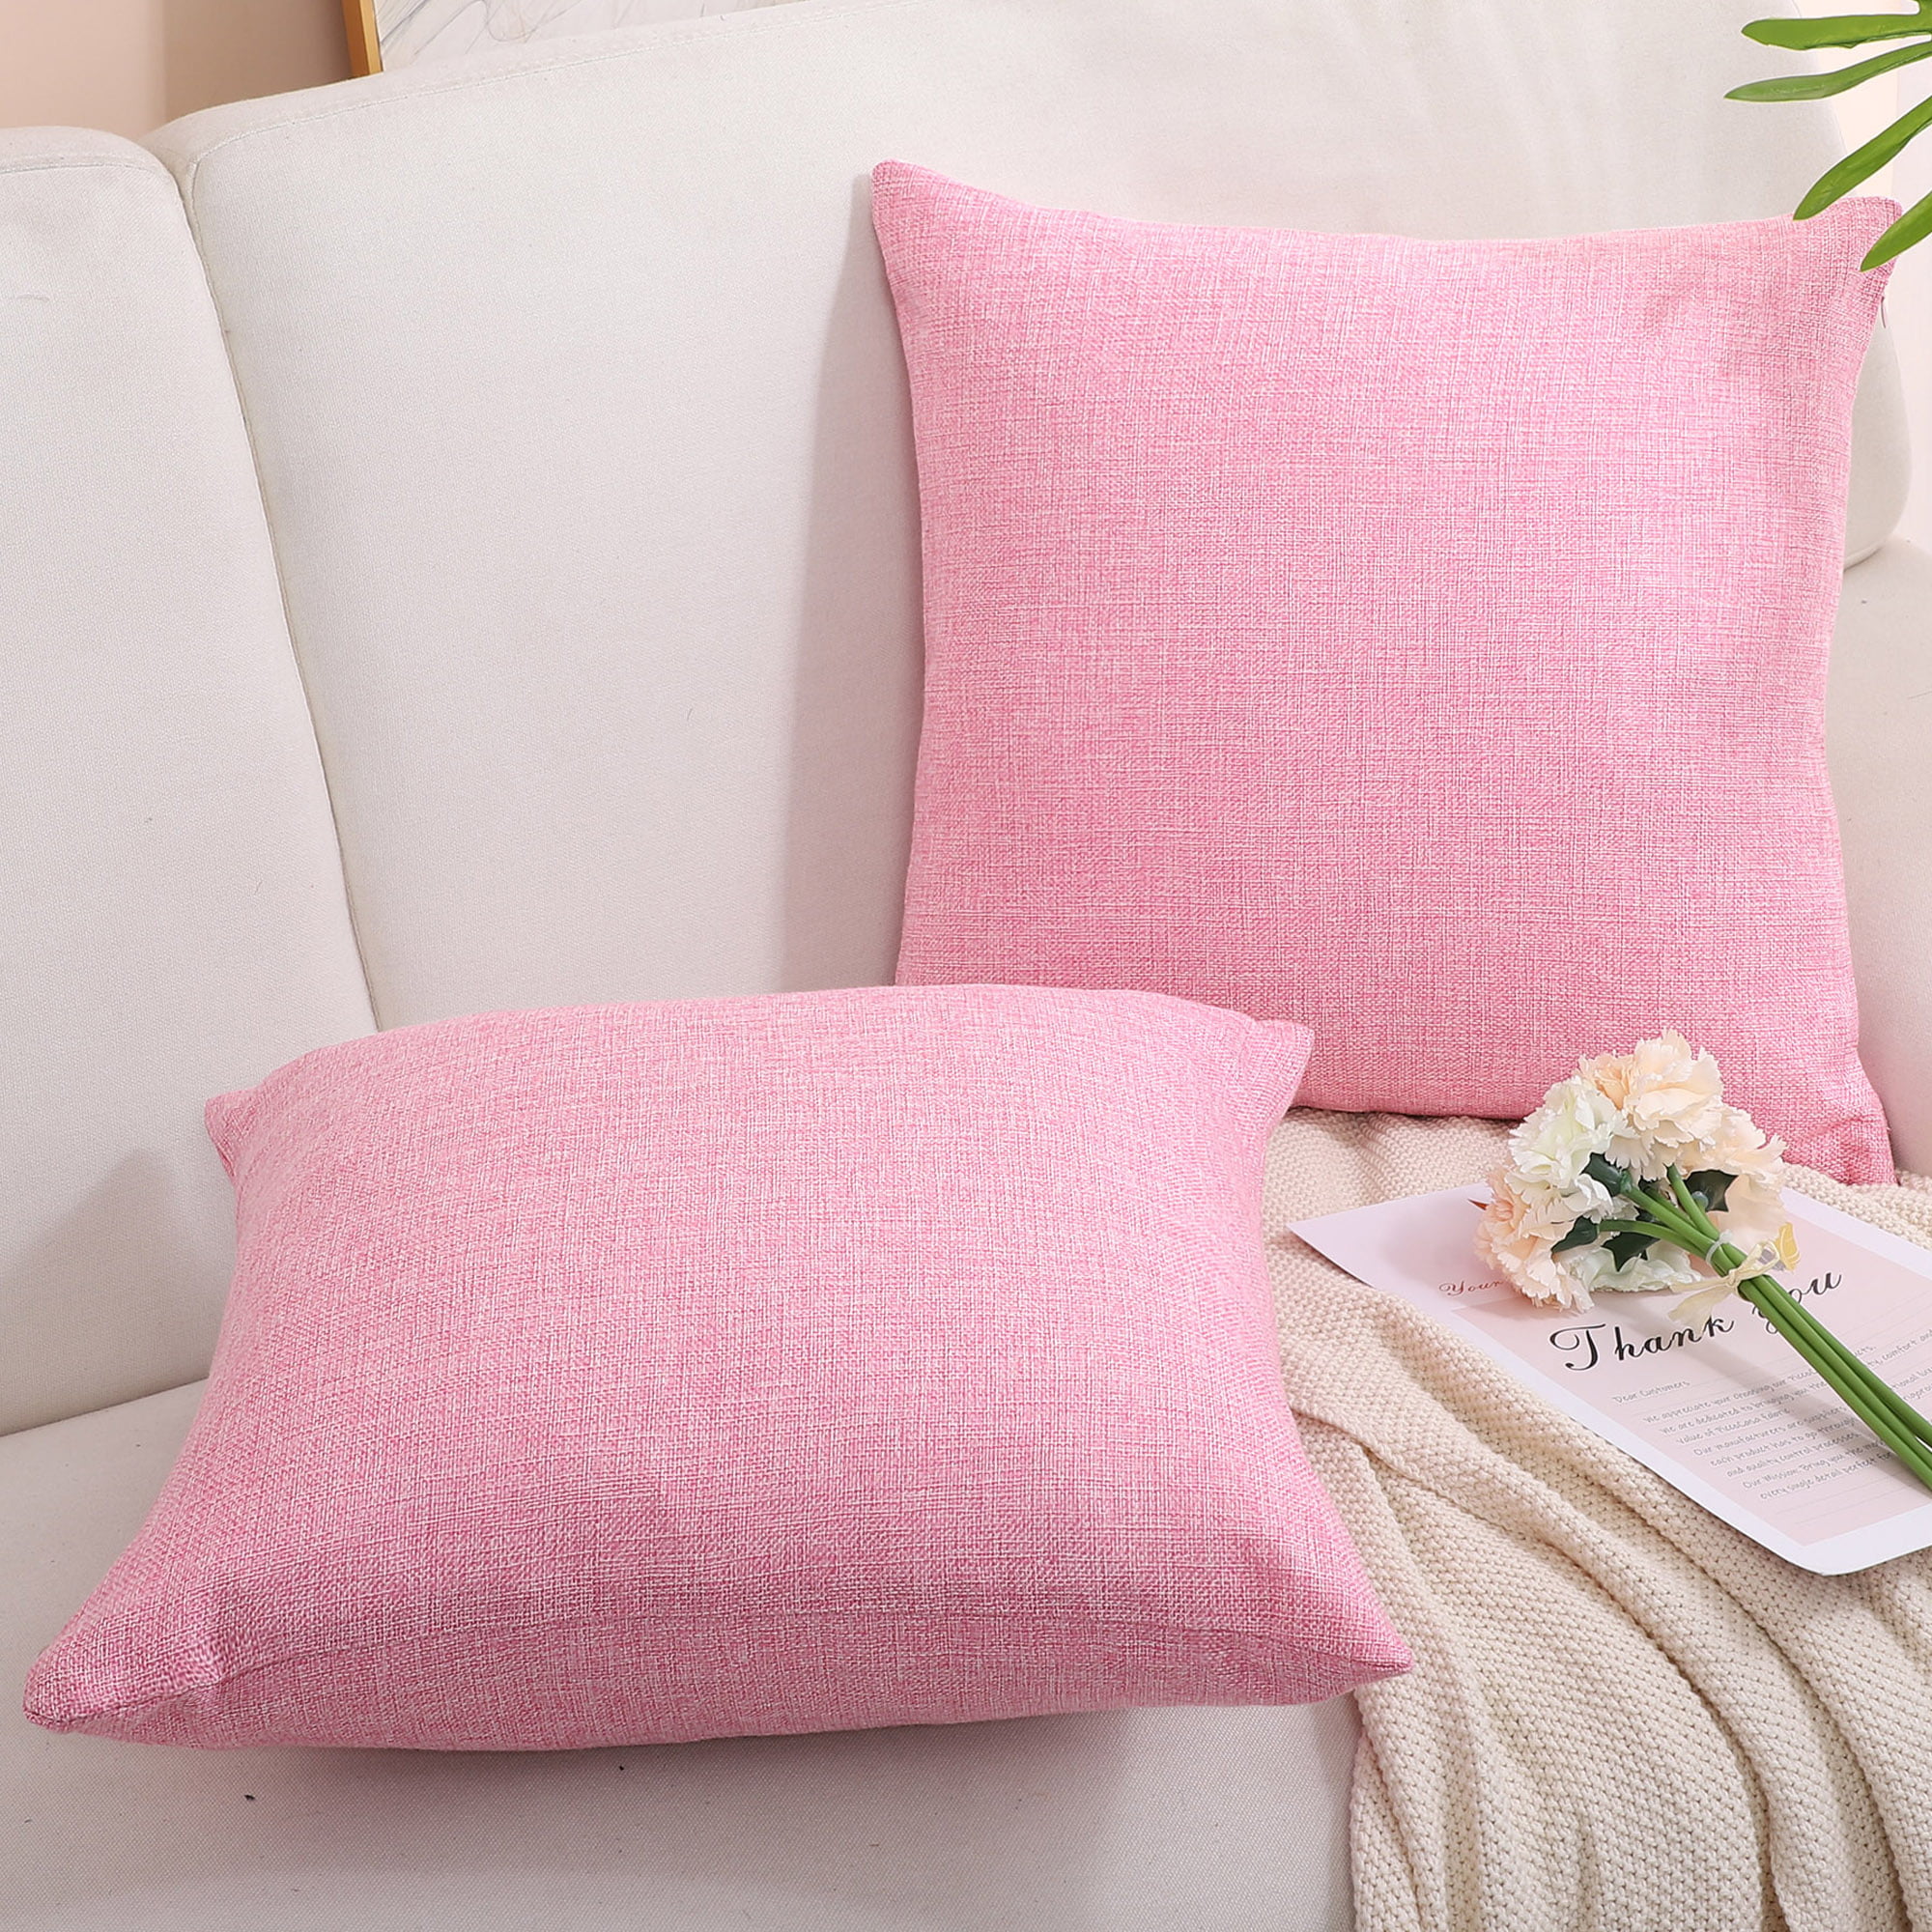 PiccoCasa 2Pcs Faux Linen Throw Pillow Covers, 18 x 18 Inch, Linen Textured Decorative Cushion